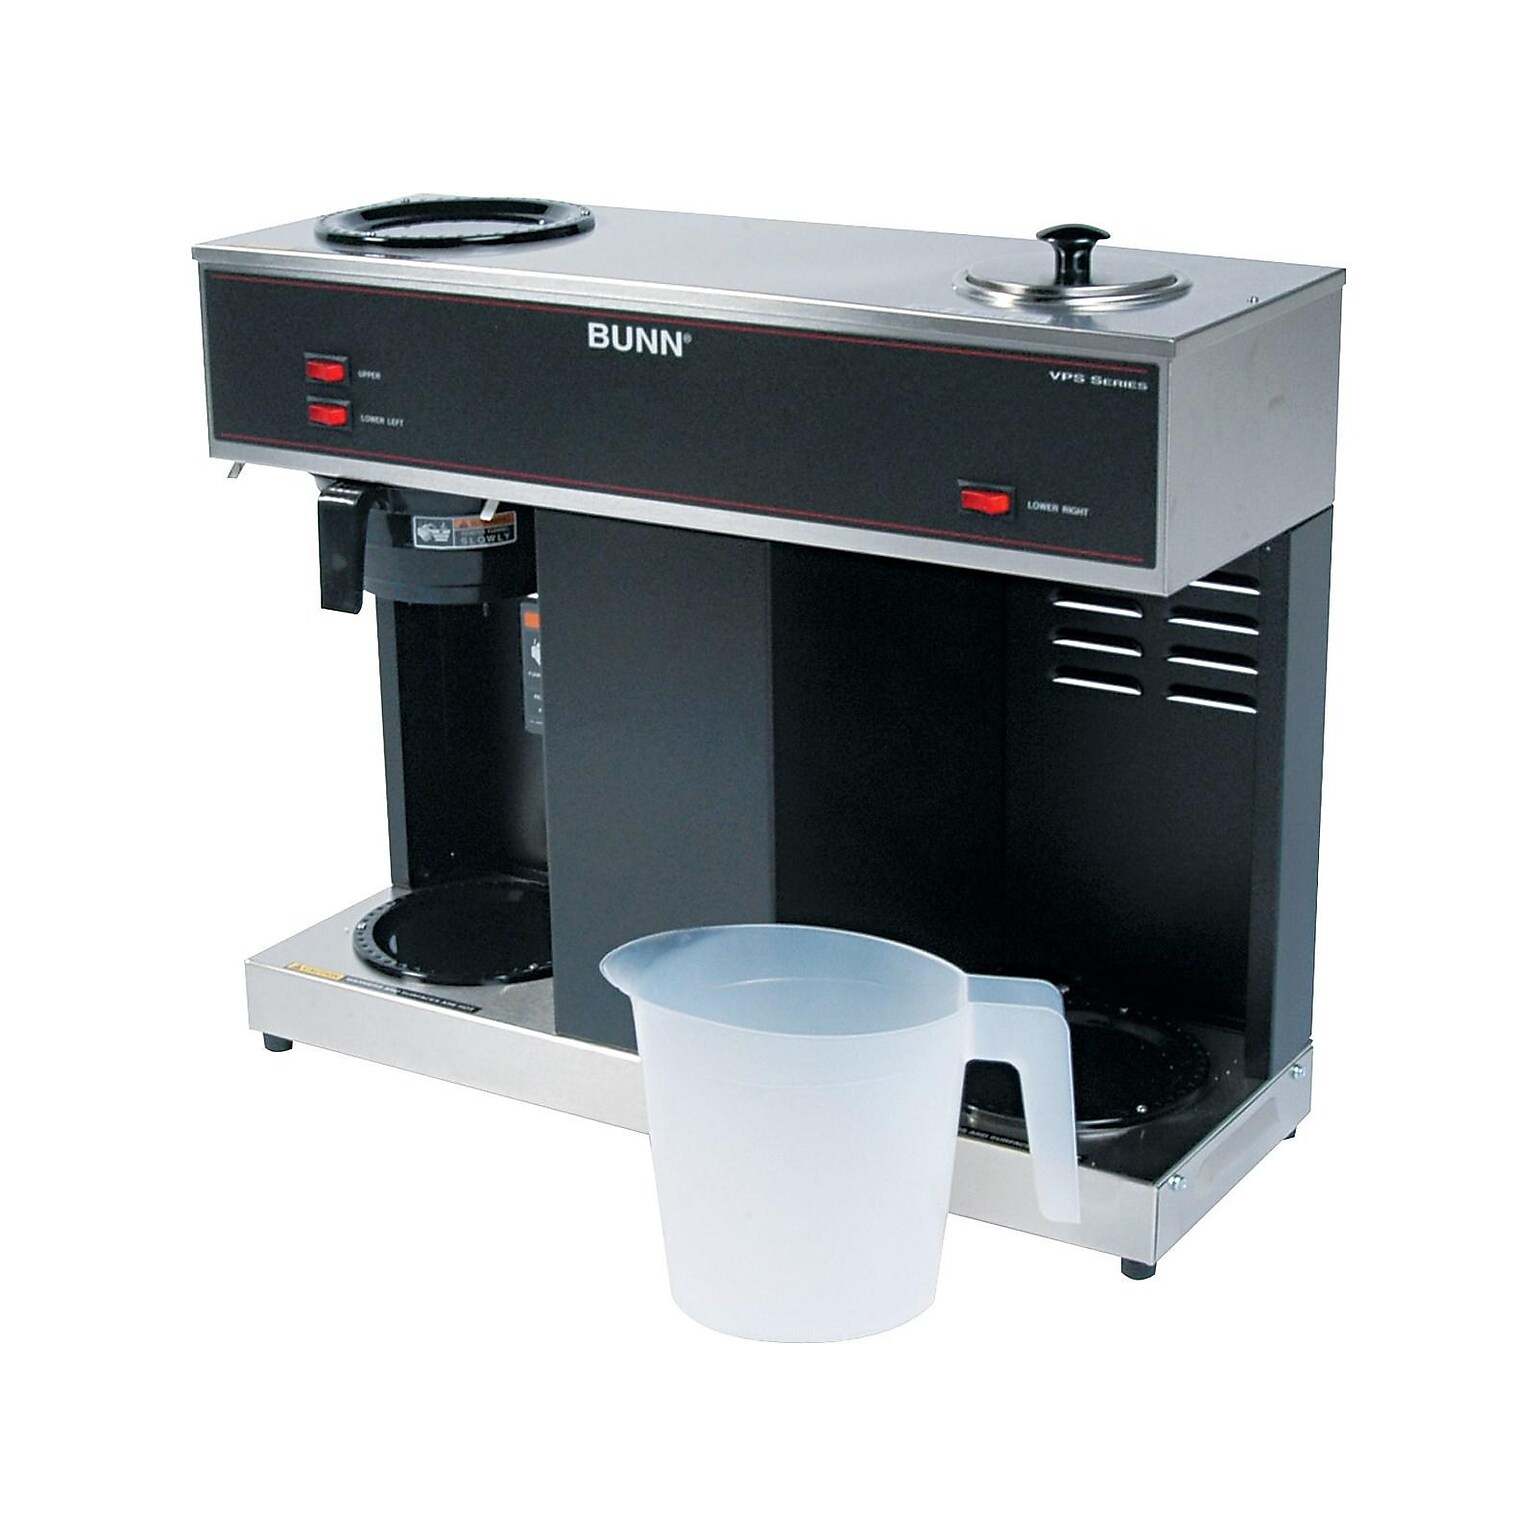 Bunn Pour-O-Matic VPS Series 12-Cups Coffee Urns, Black (BUNVPS3)